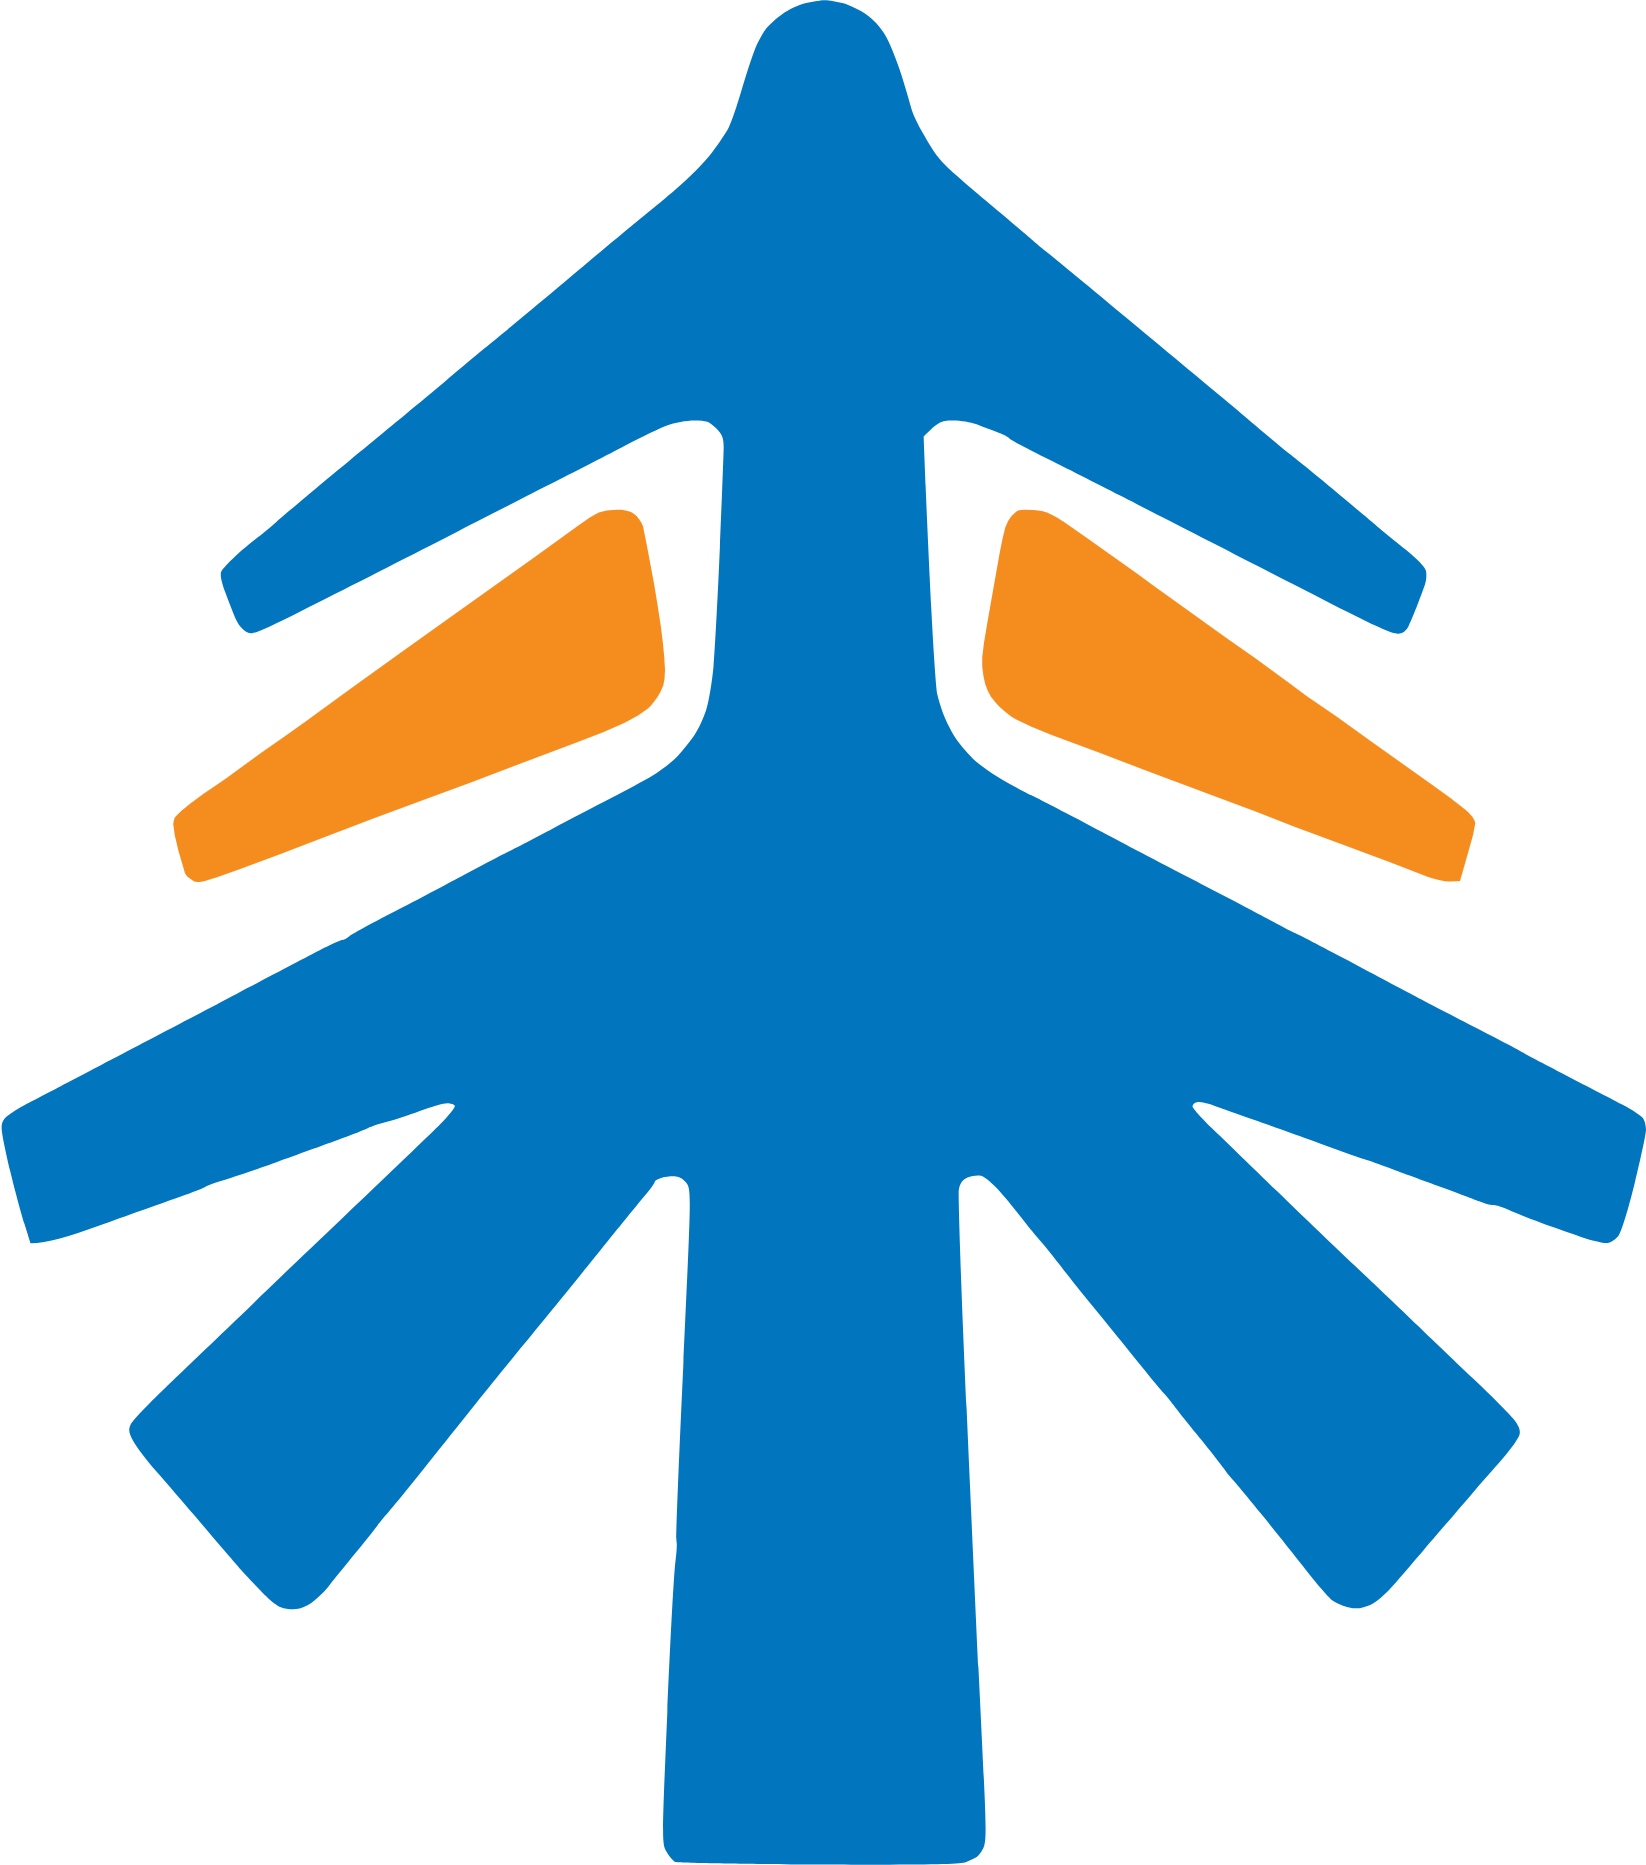 TAL Education Group logo (PNG transparent)